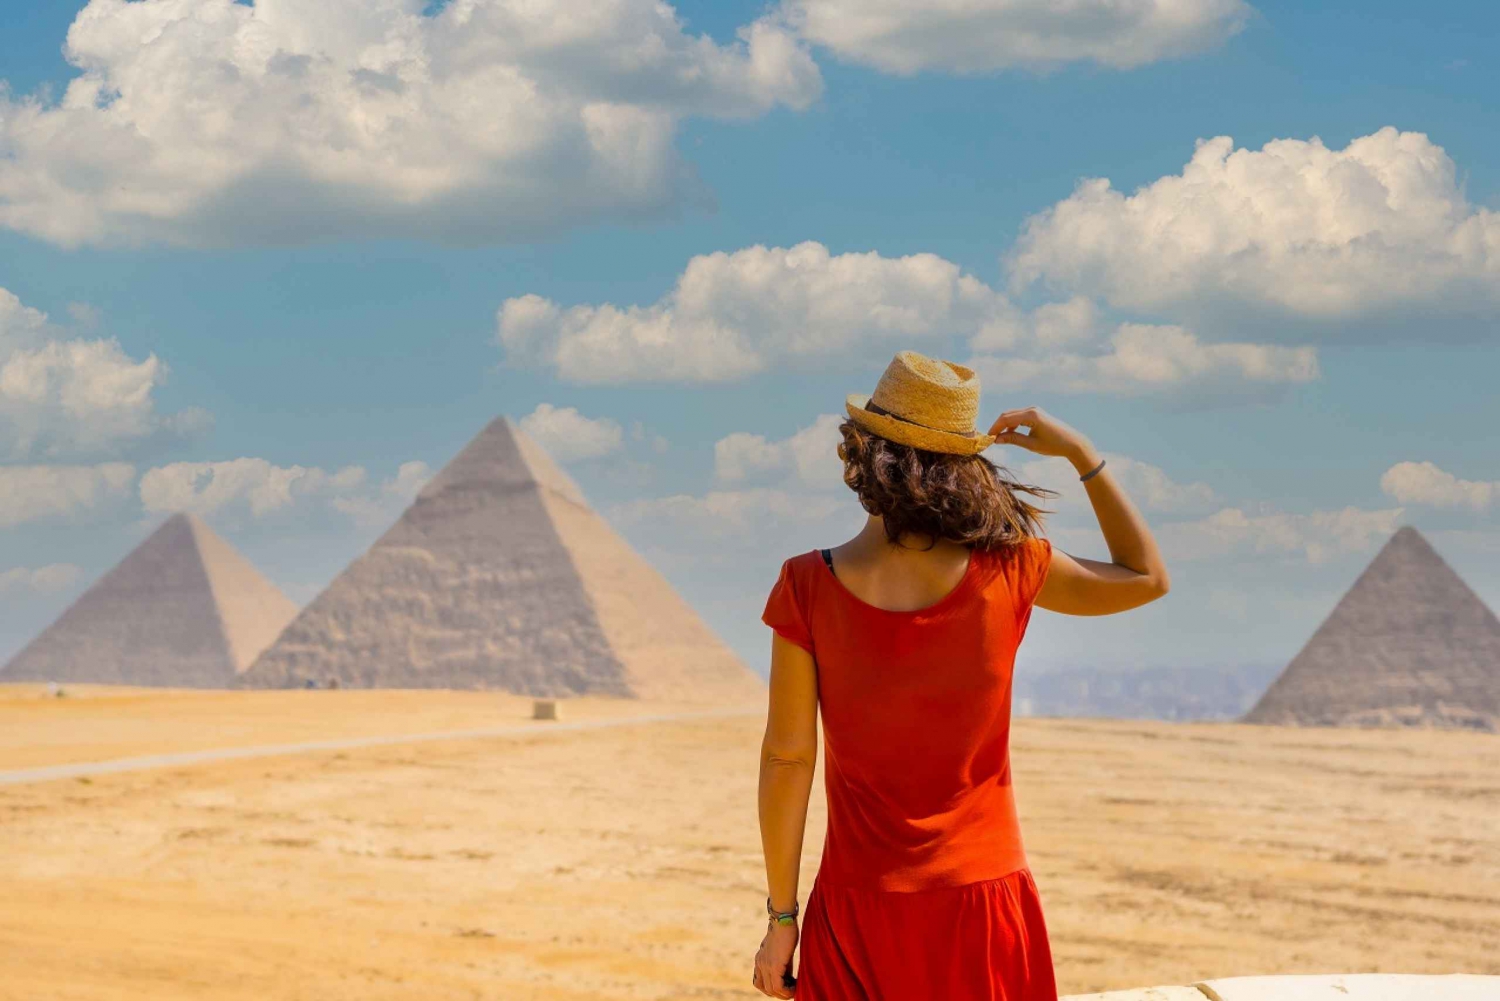 Sharm El Sheikh: Cairo Pyramids, Sphinx, and Egyptian Museum